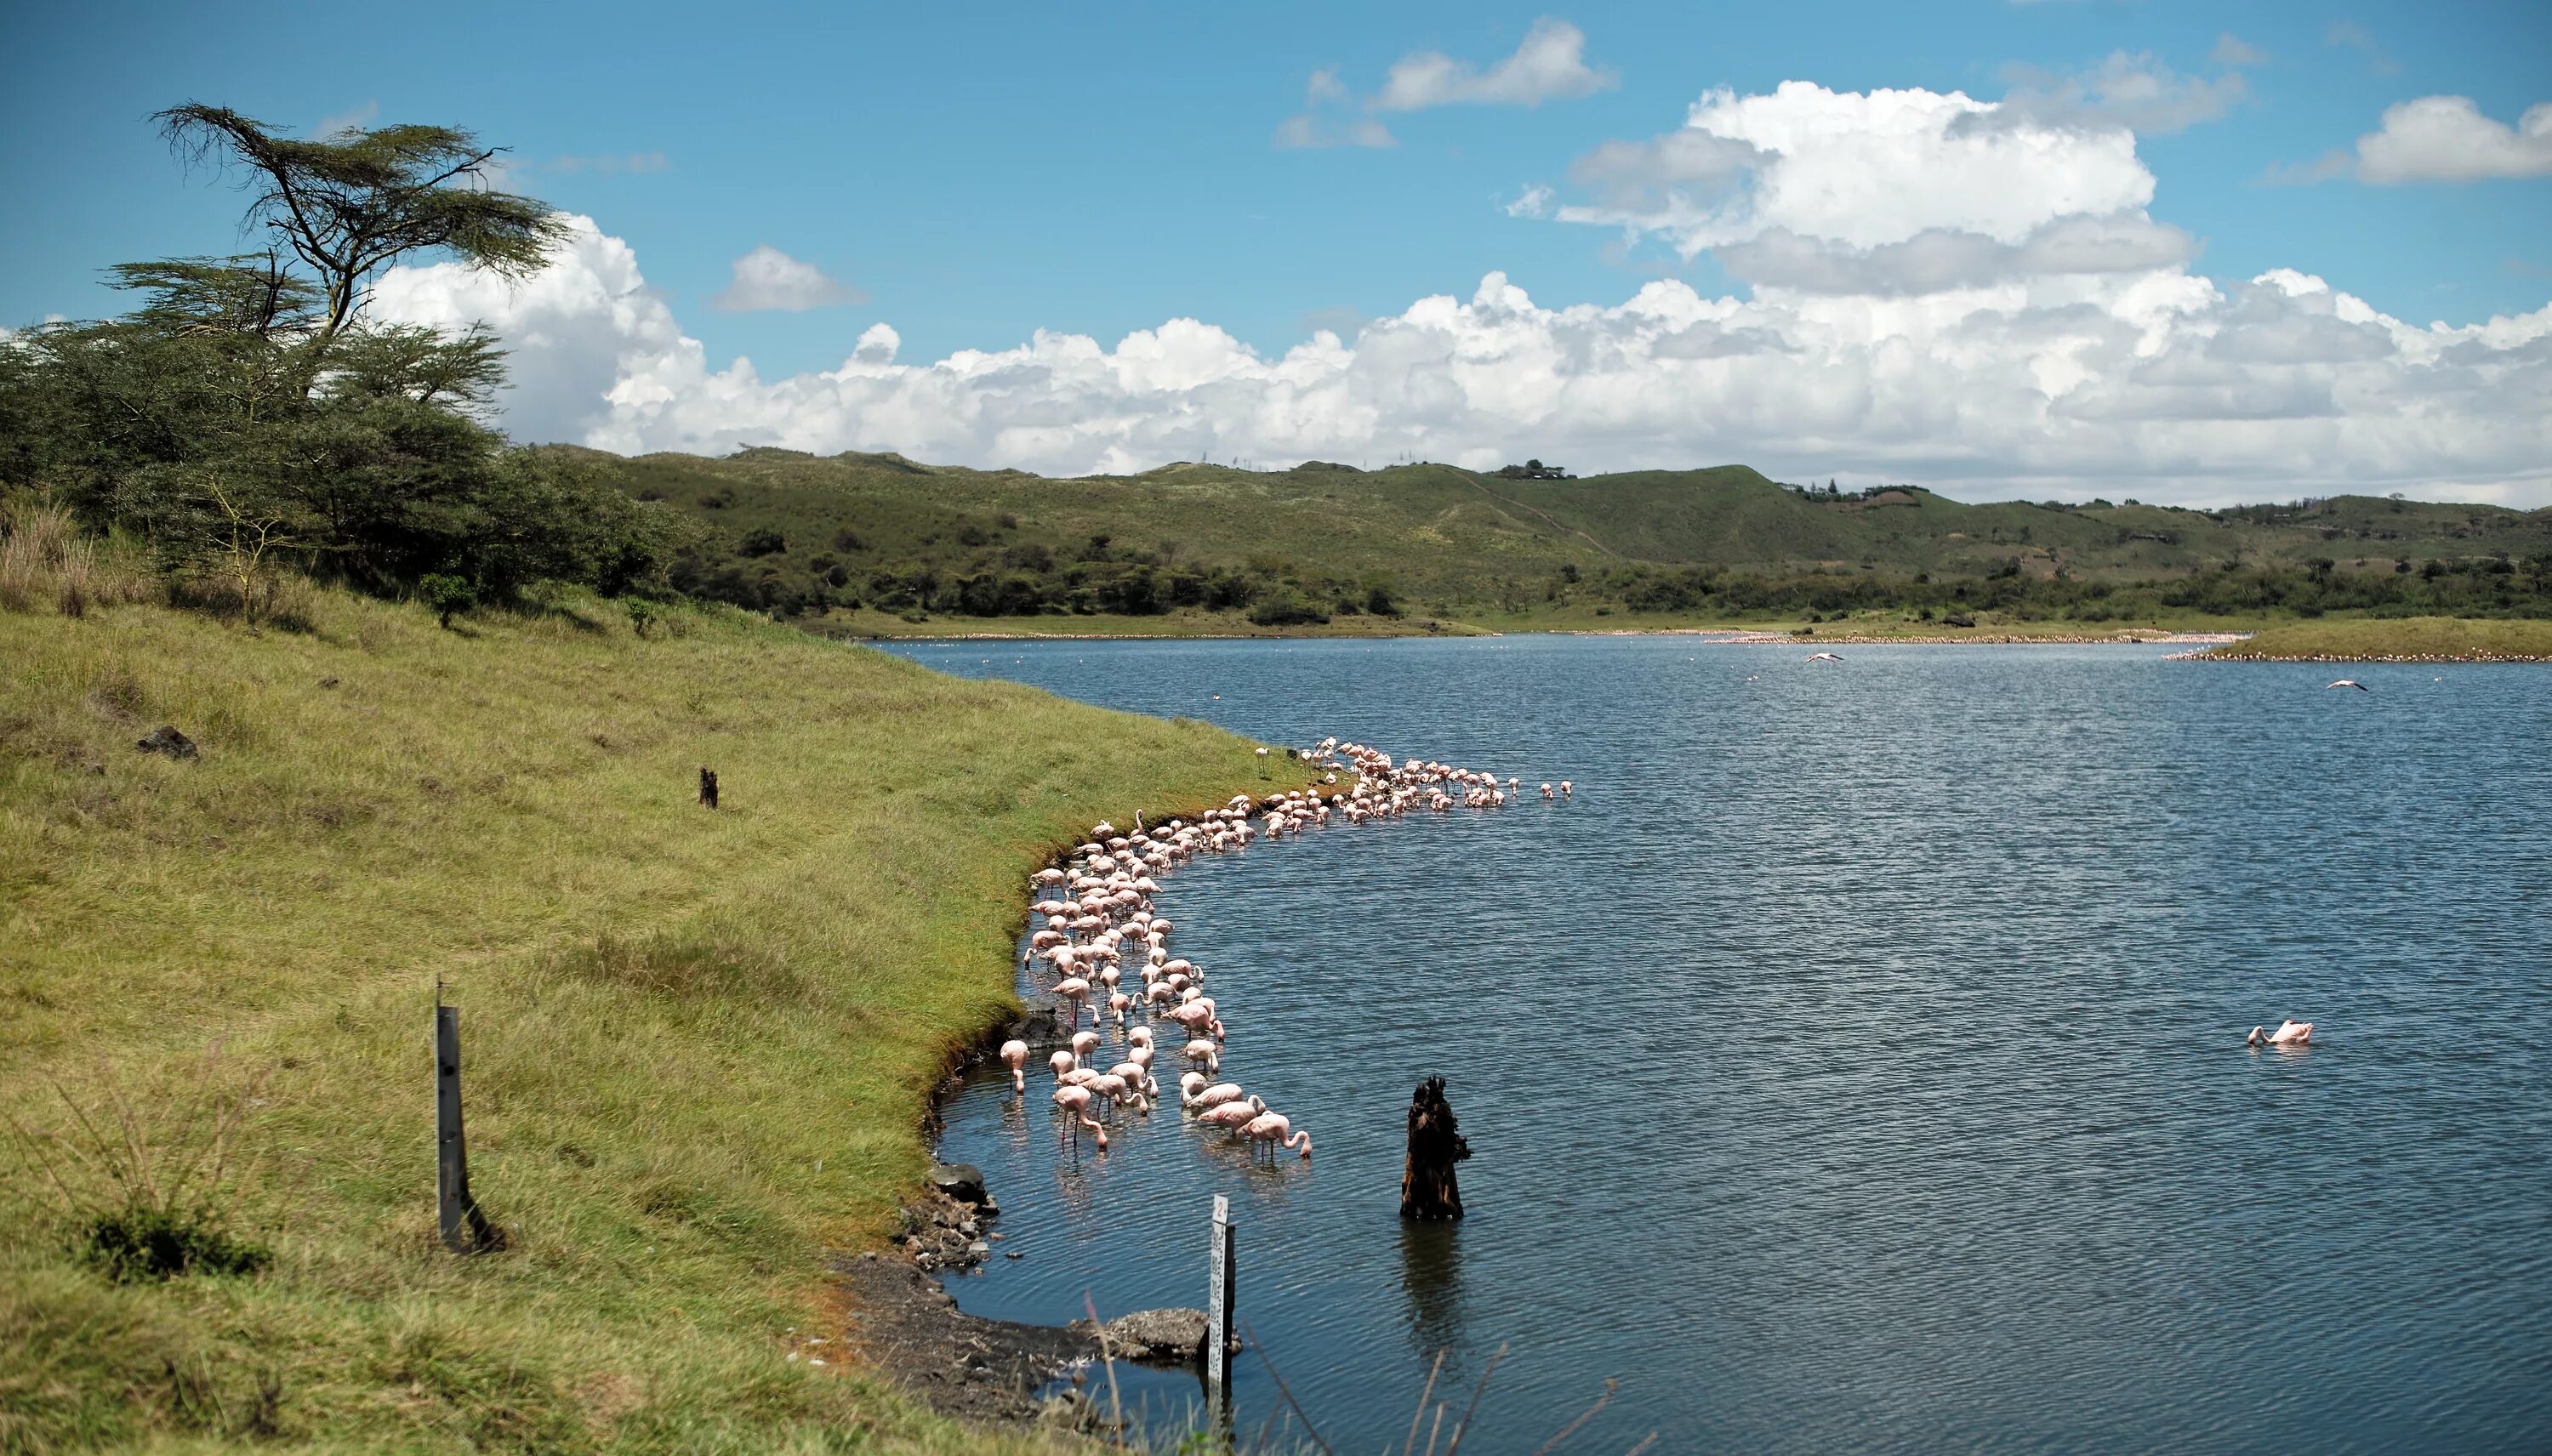 Озеро ливингстона африка. Танзания озеро Танганьика. Озеро Ньяса в Танзании. Озеро Танганьика национальный парк.